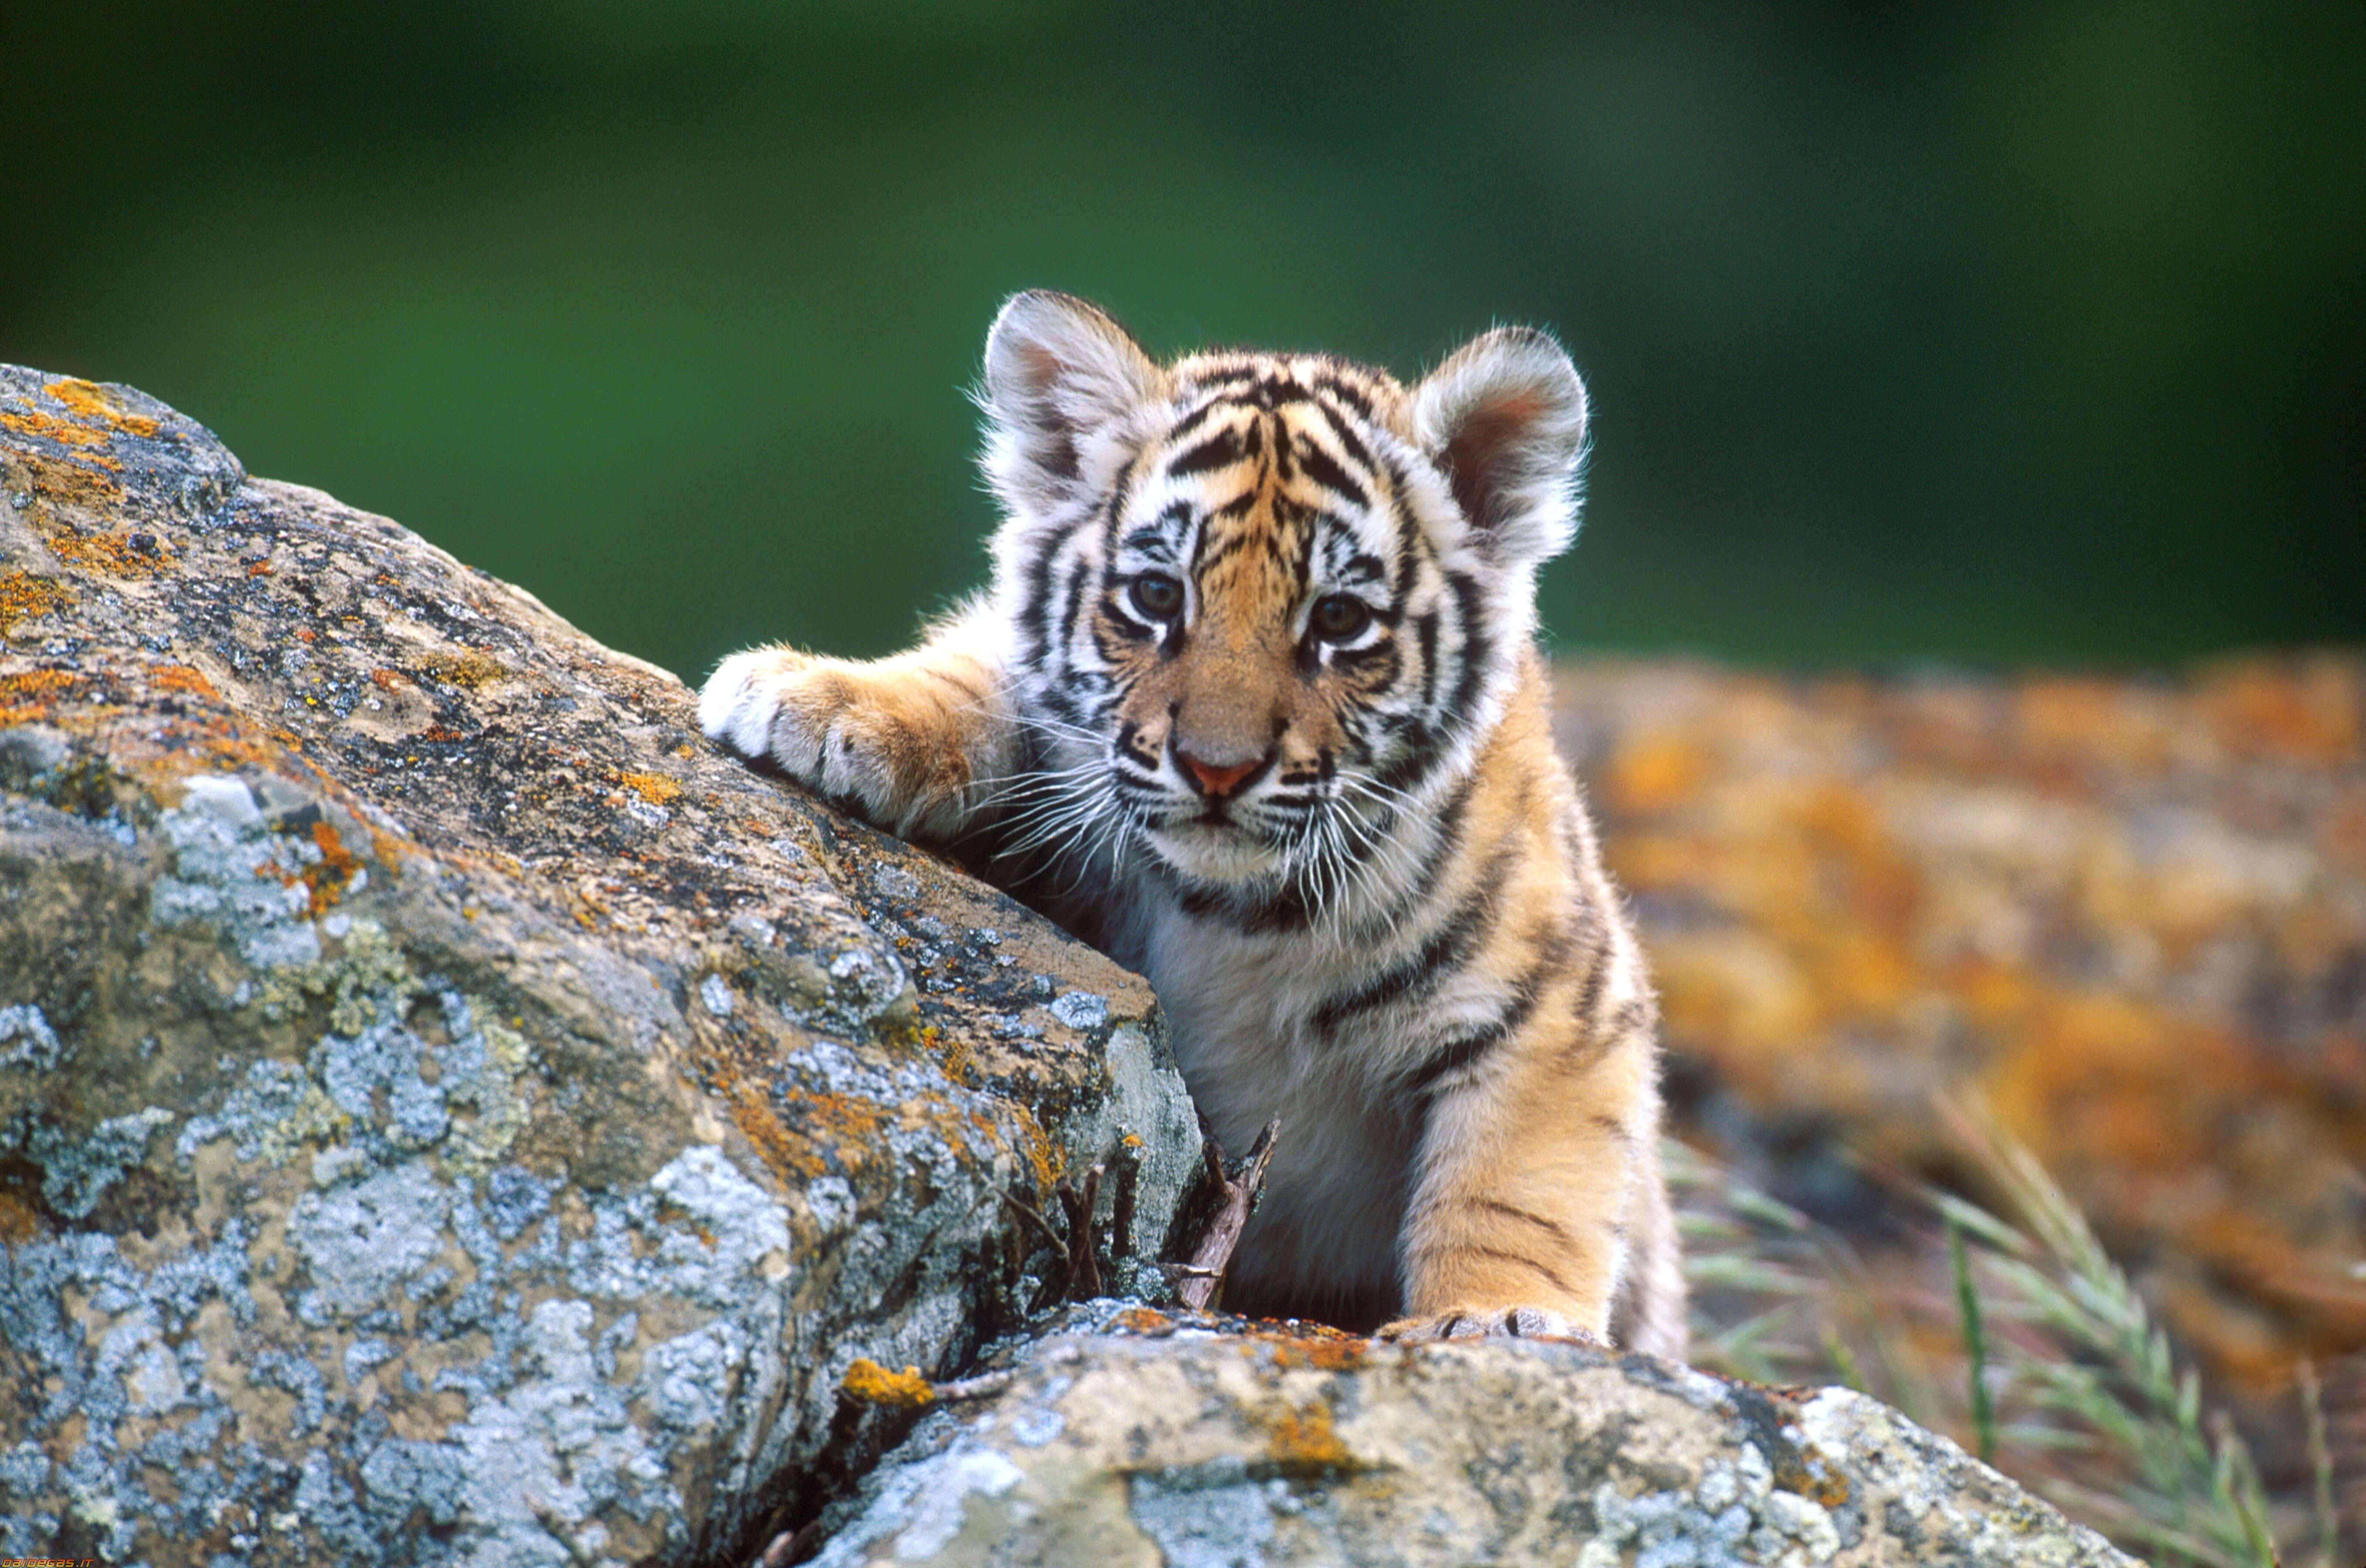 Big jpg image. Тайгер тигр. Тигренок. Красивый тигр. Маленький тигр.